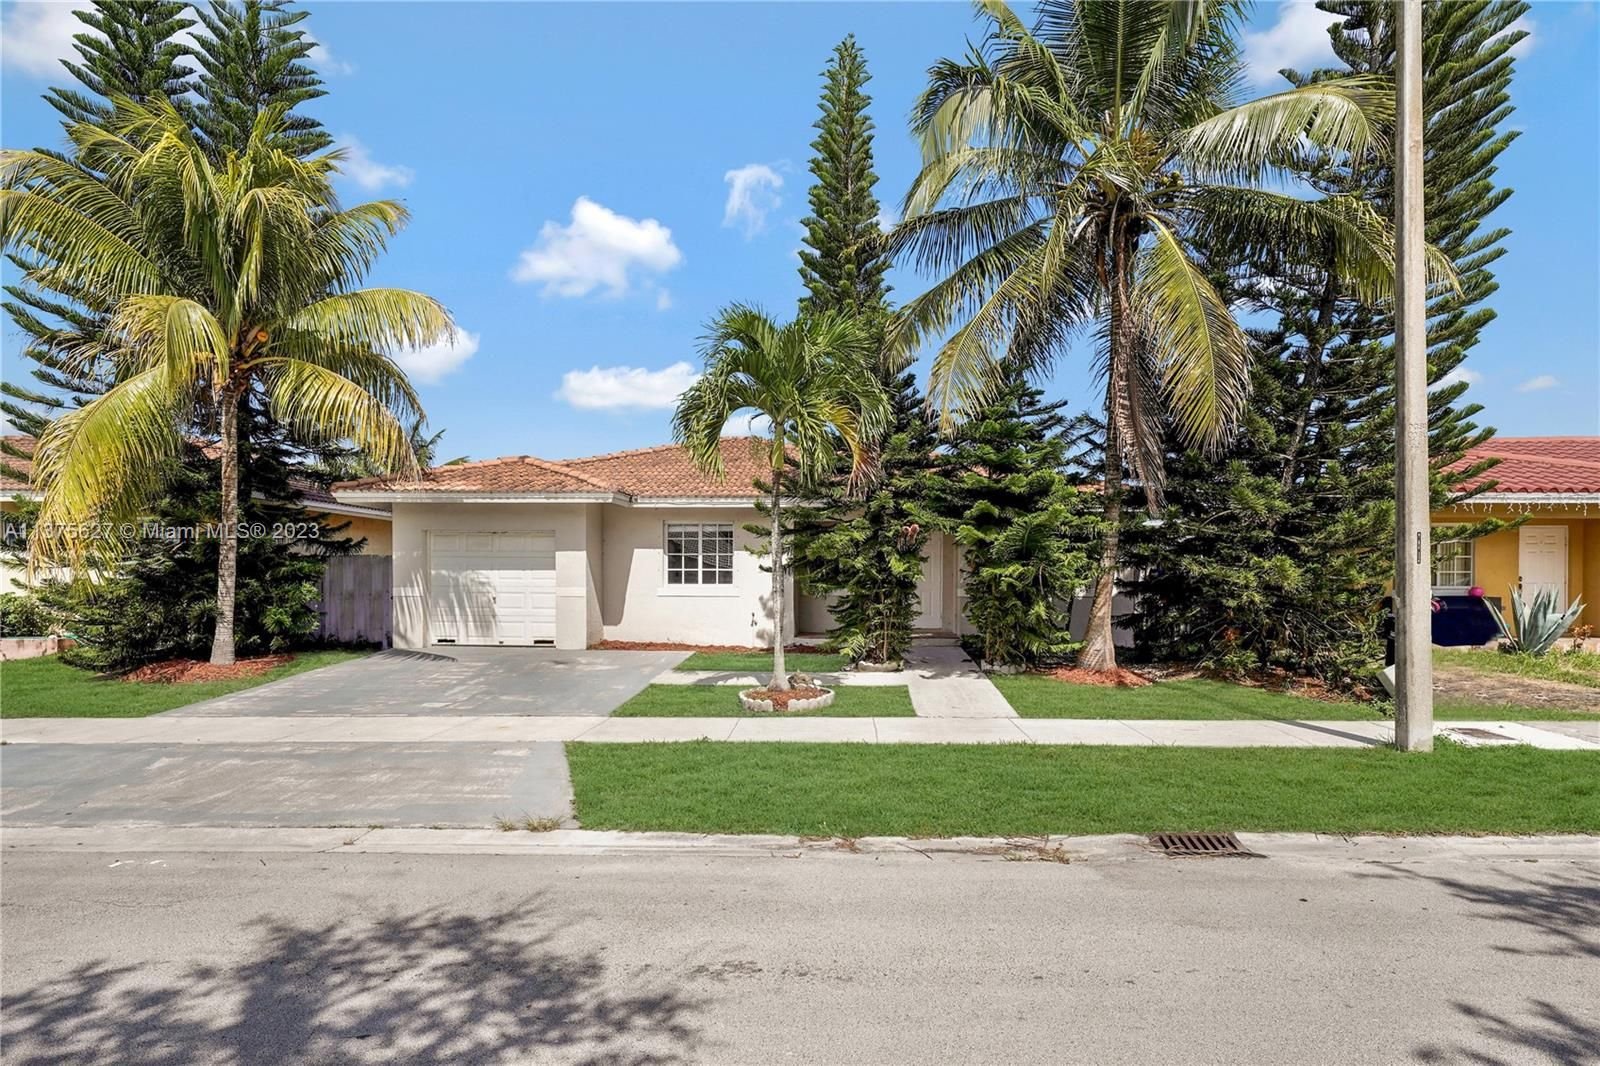 Real estate property located at 18283 139th Pl, Miami-Dade County, Miami, FL